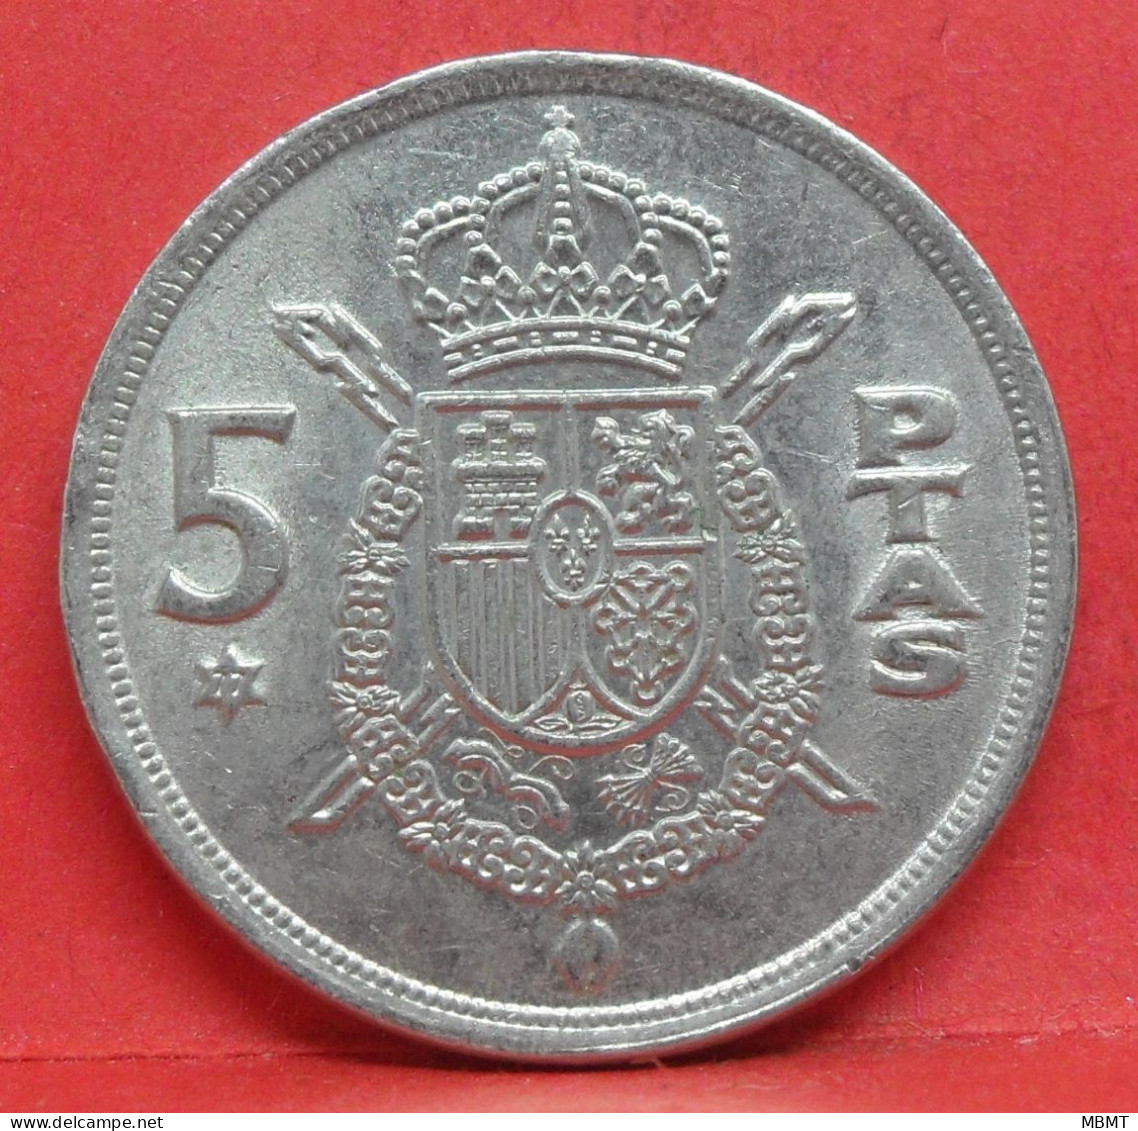 5 Pesetas 1975 étoile 77 - TTB - Pièce Monnaie Espagne - Article N°2369 - 5 Pesetas